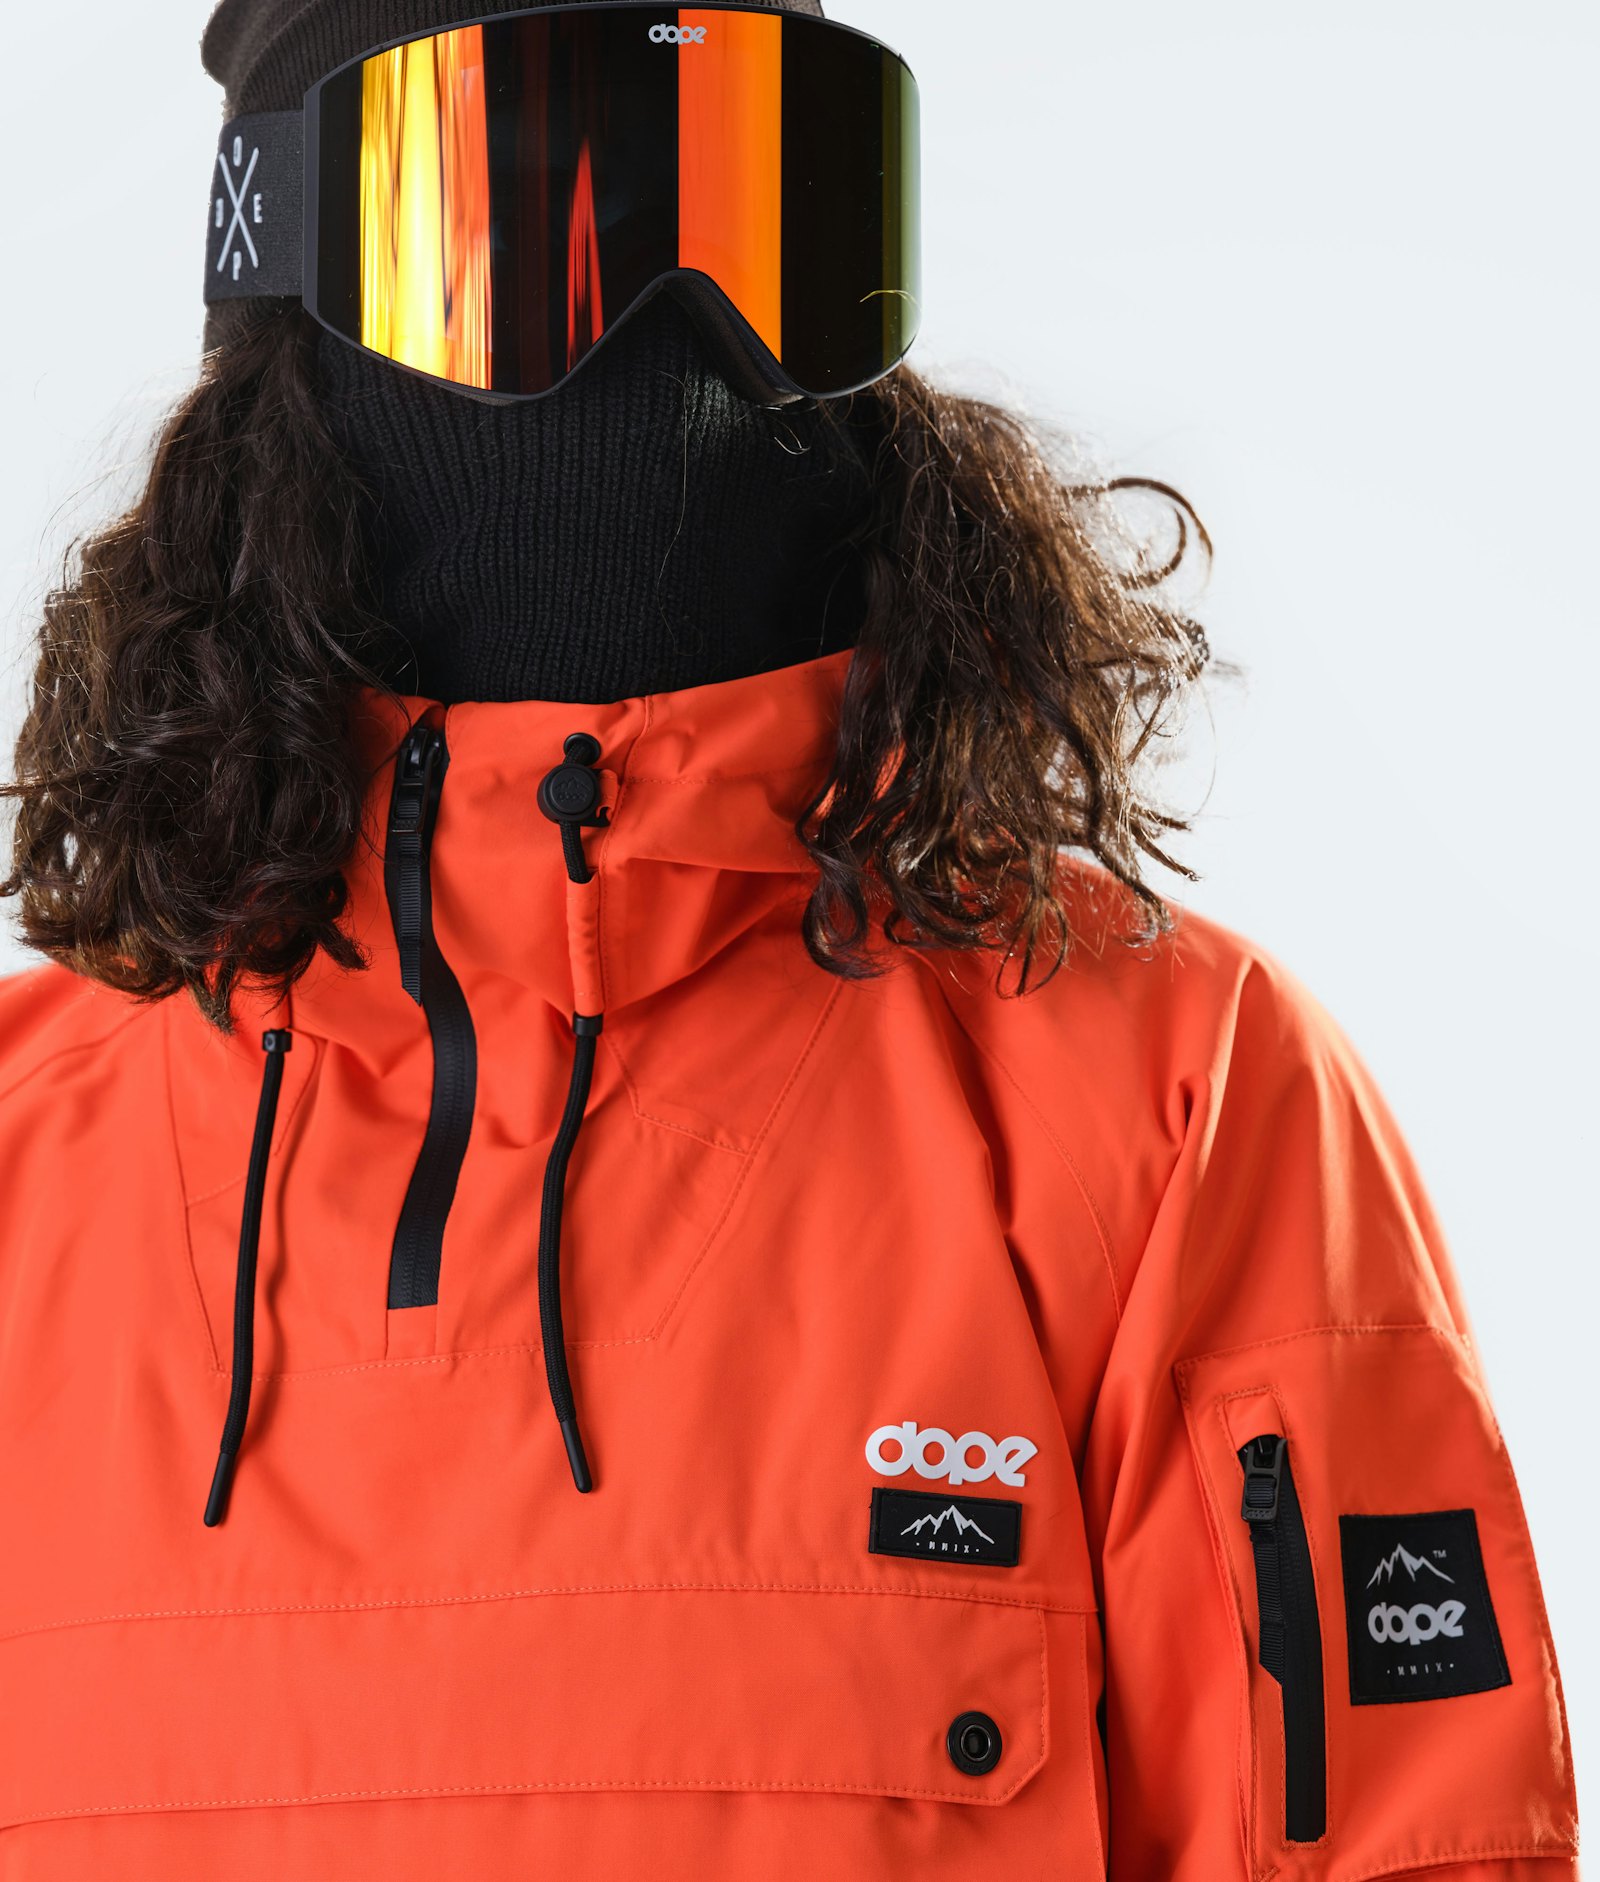 Annok 2020 Ski Jacket Men Orange